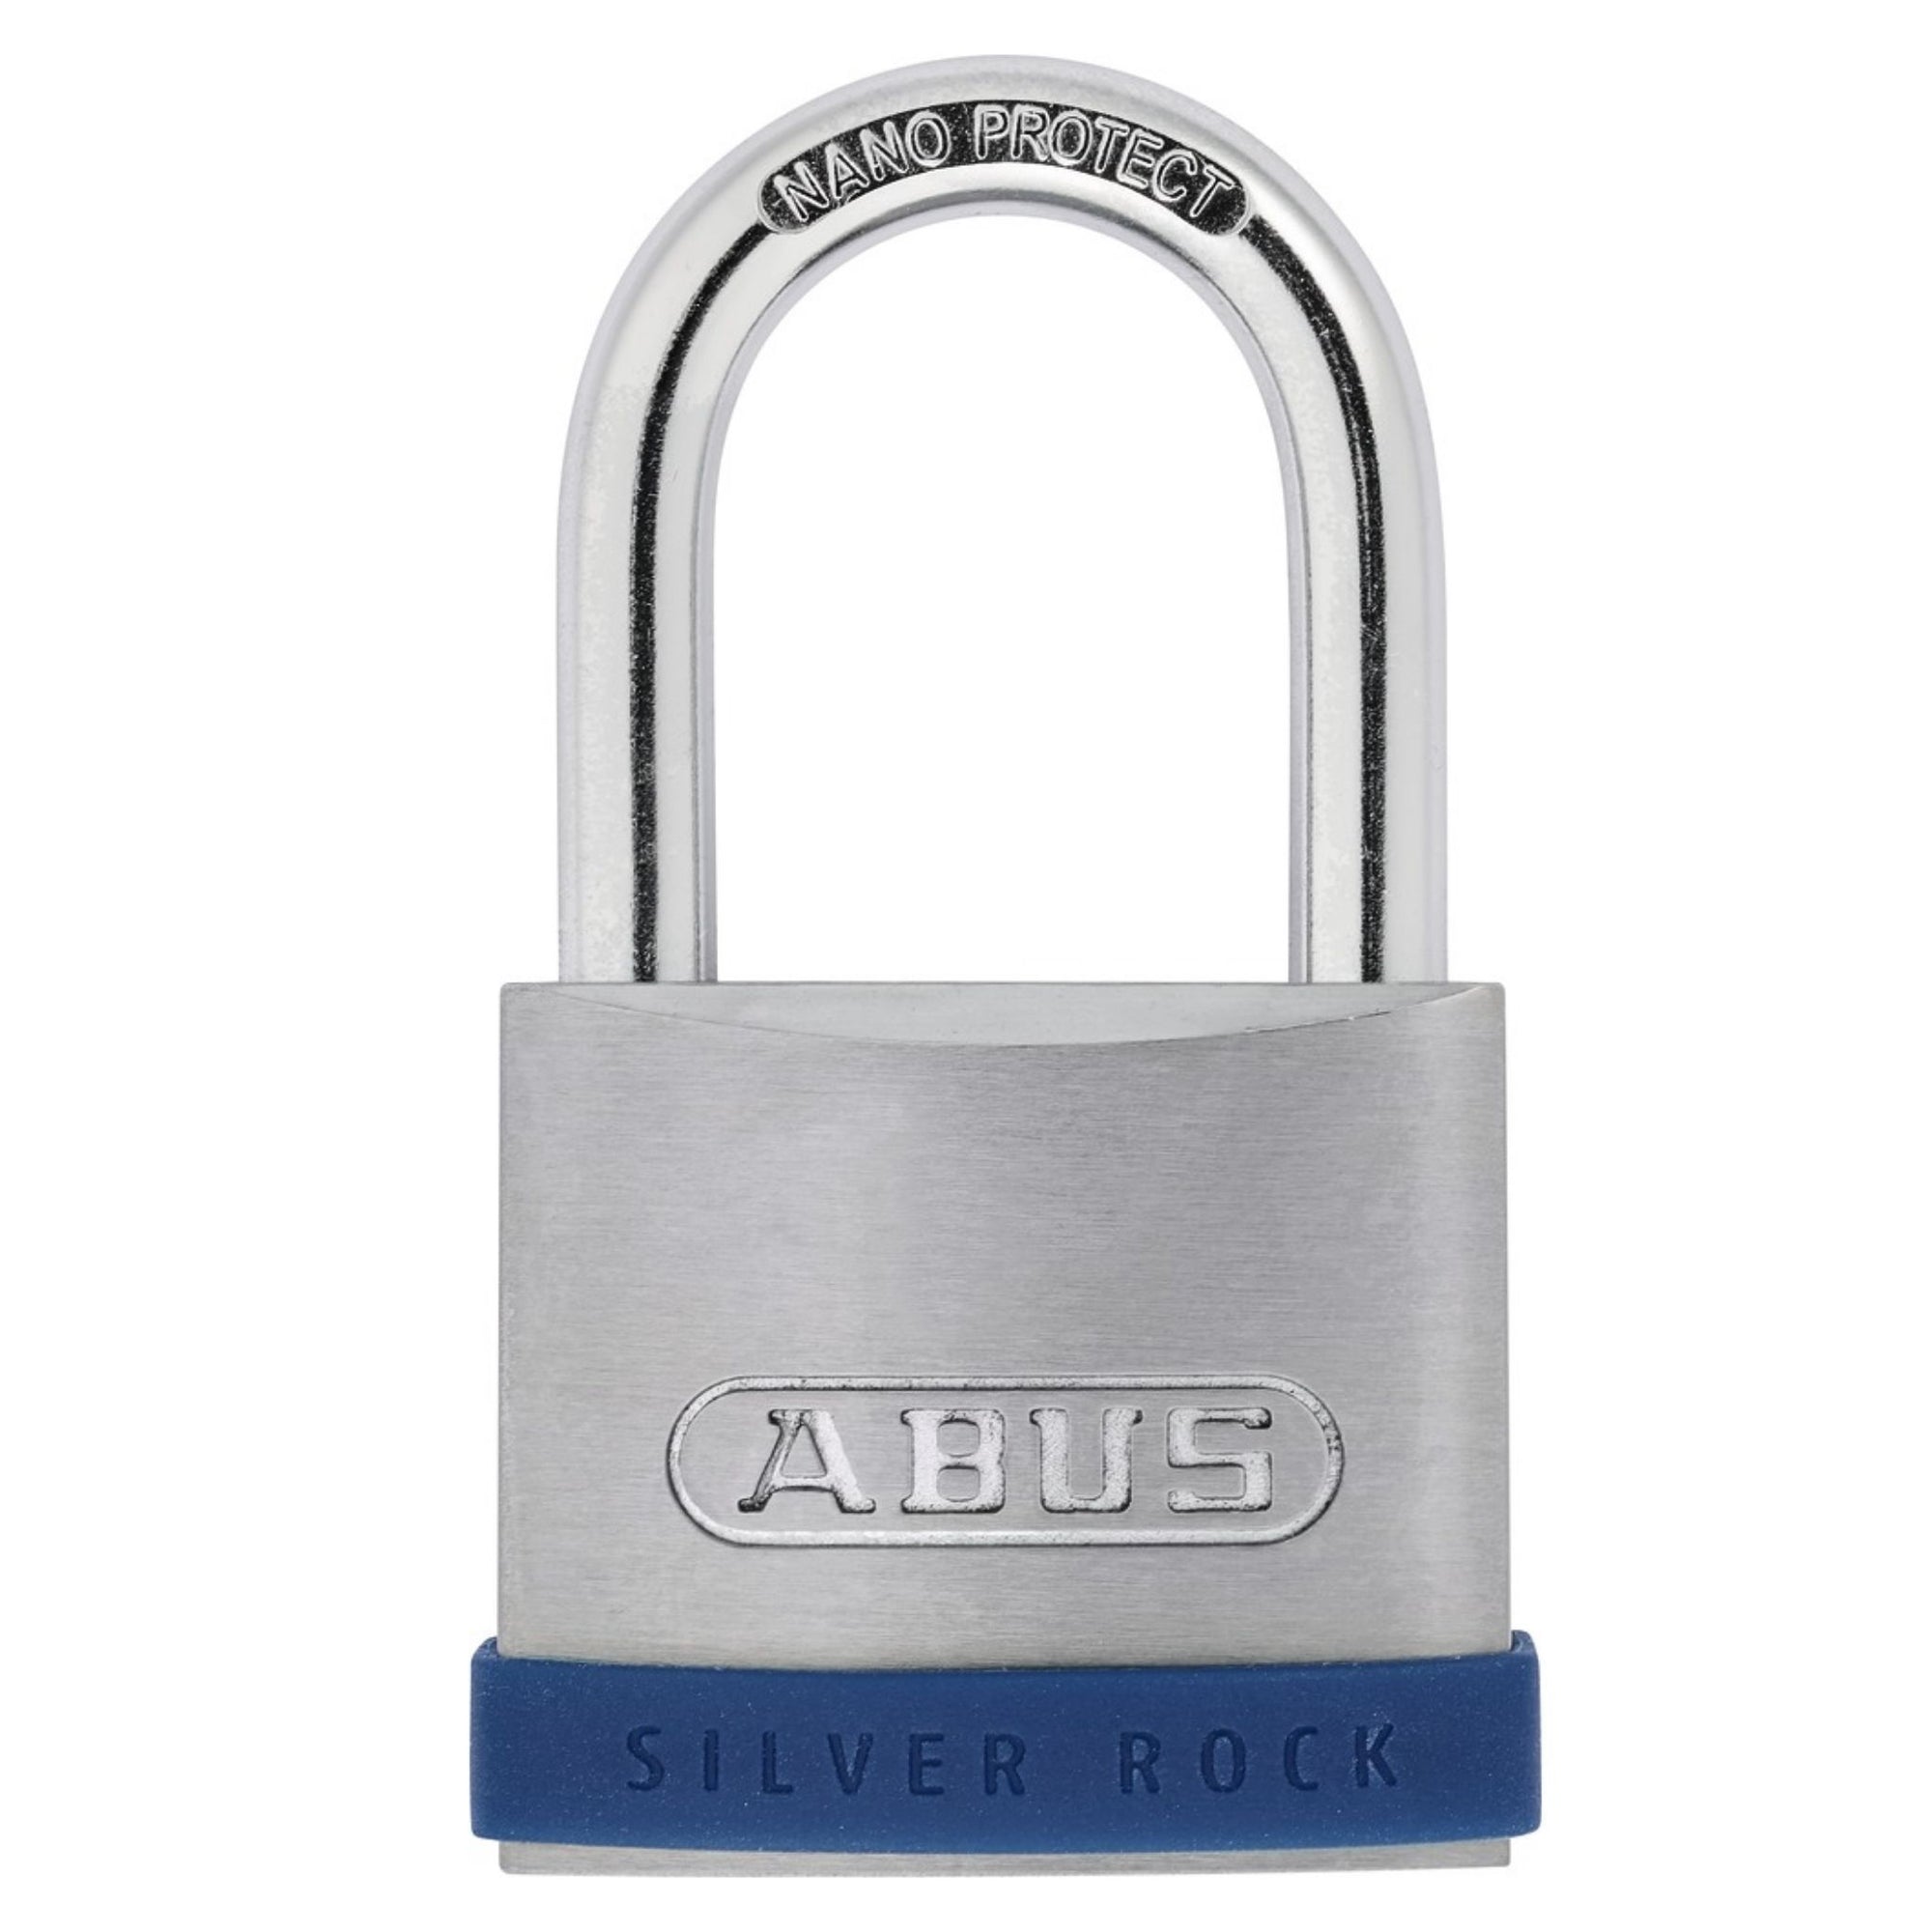 Abus 5/50HB25 KA # 6515 Padlock Silver Rock Zinc Locks Keyed Alike to KA# 6515 for Toolbox Security - The Lock Source